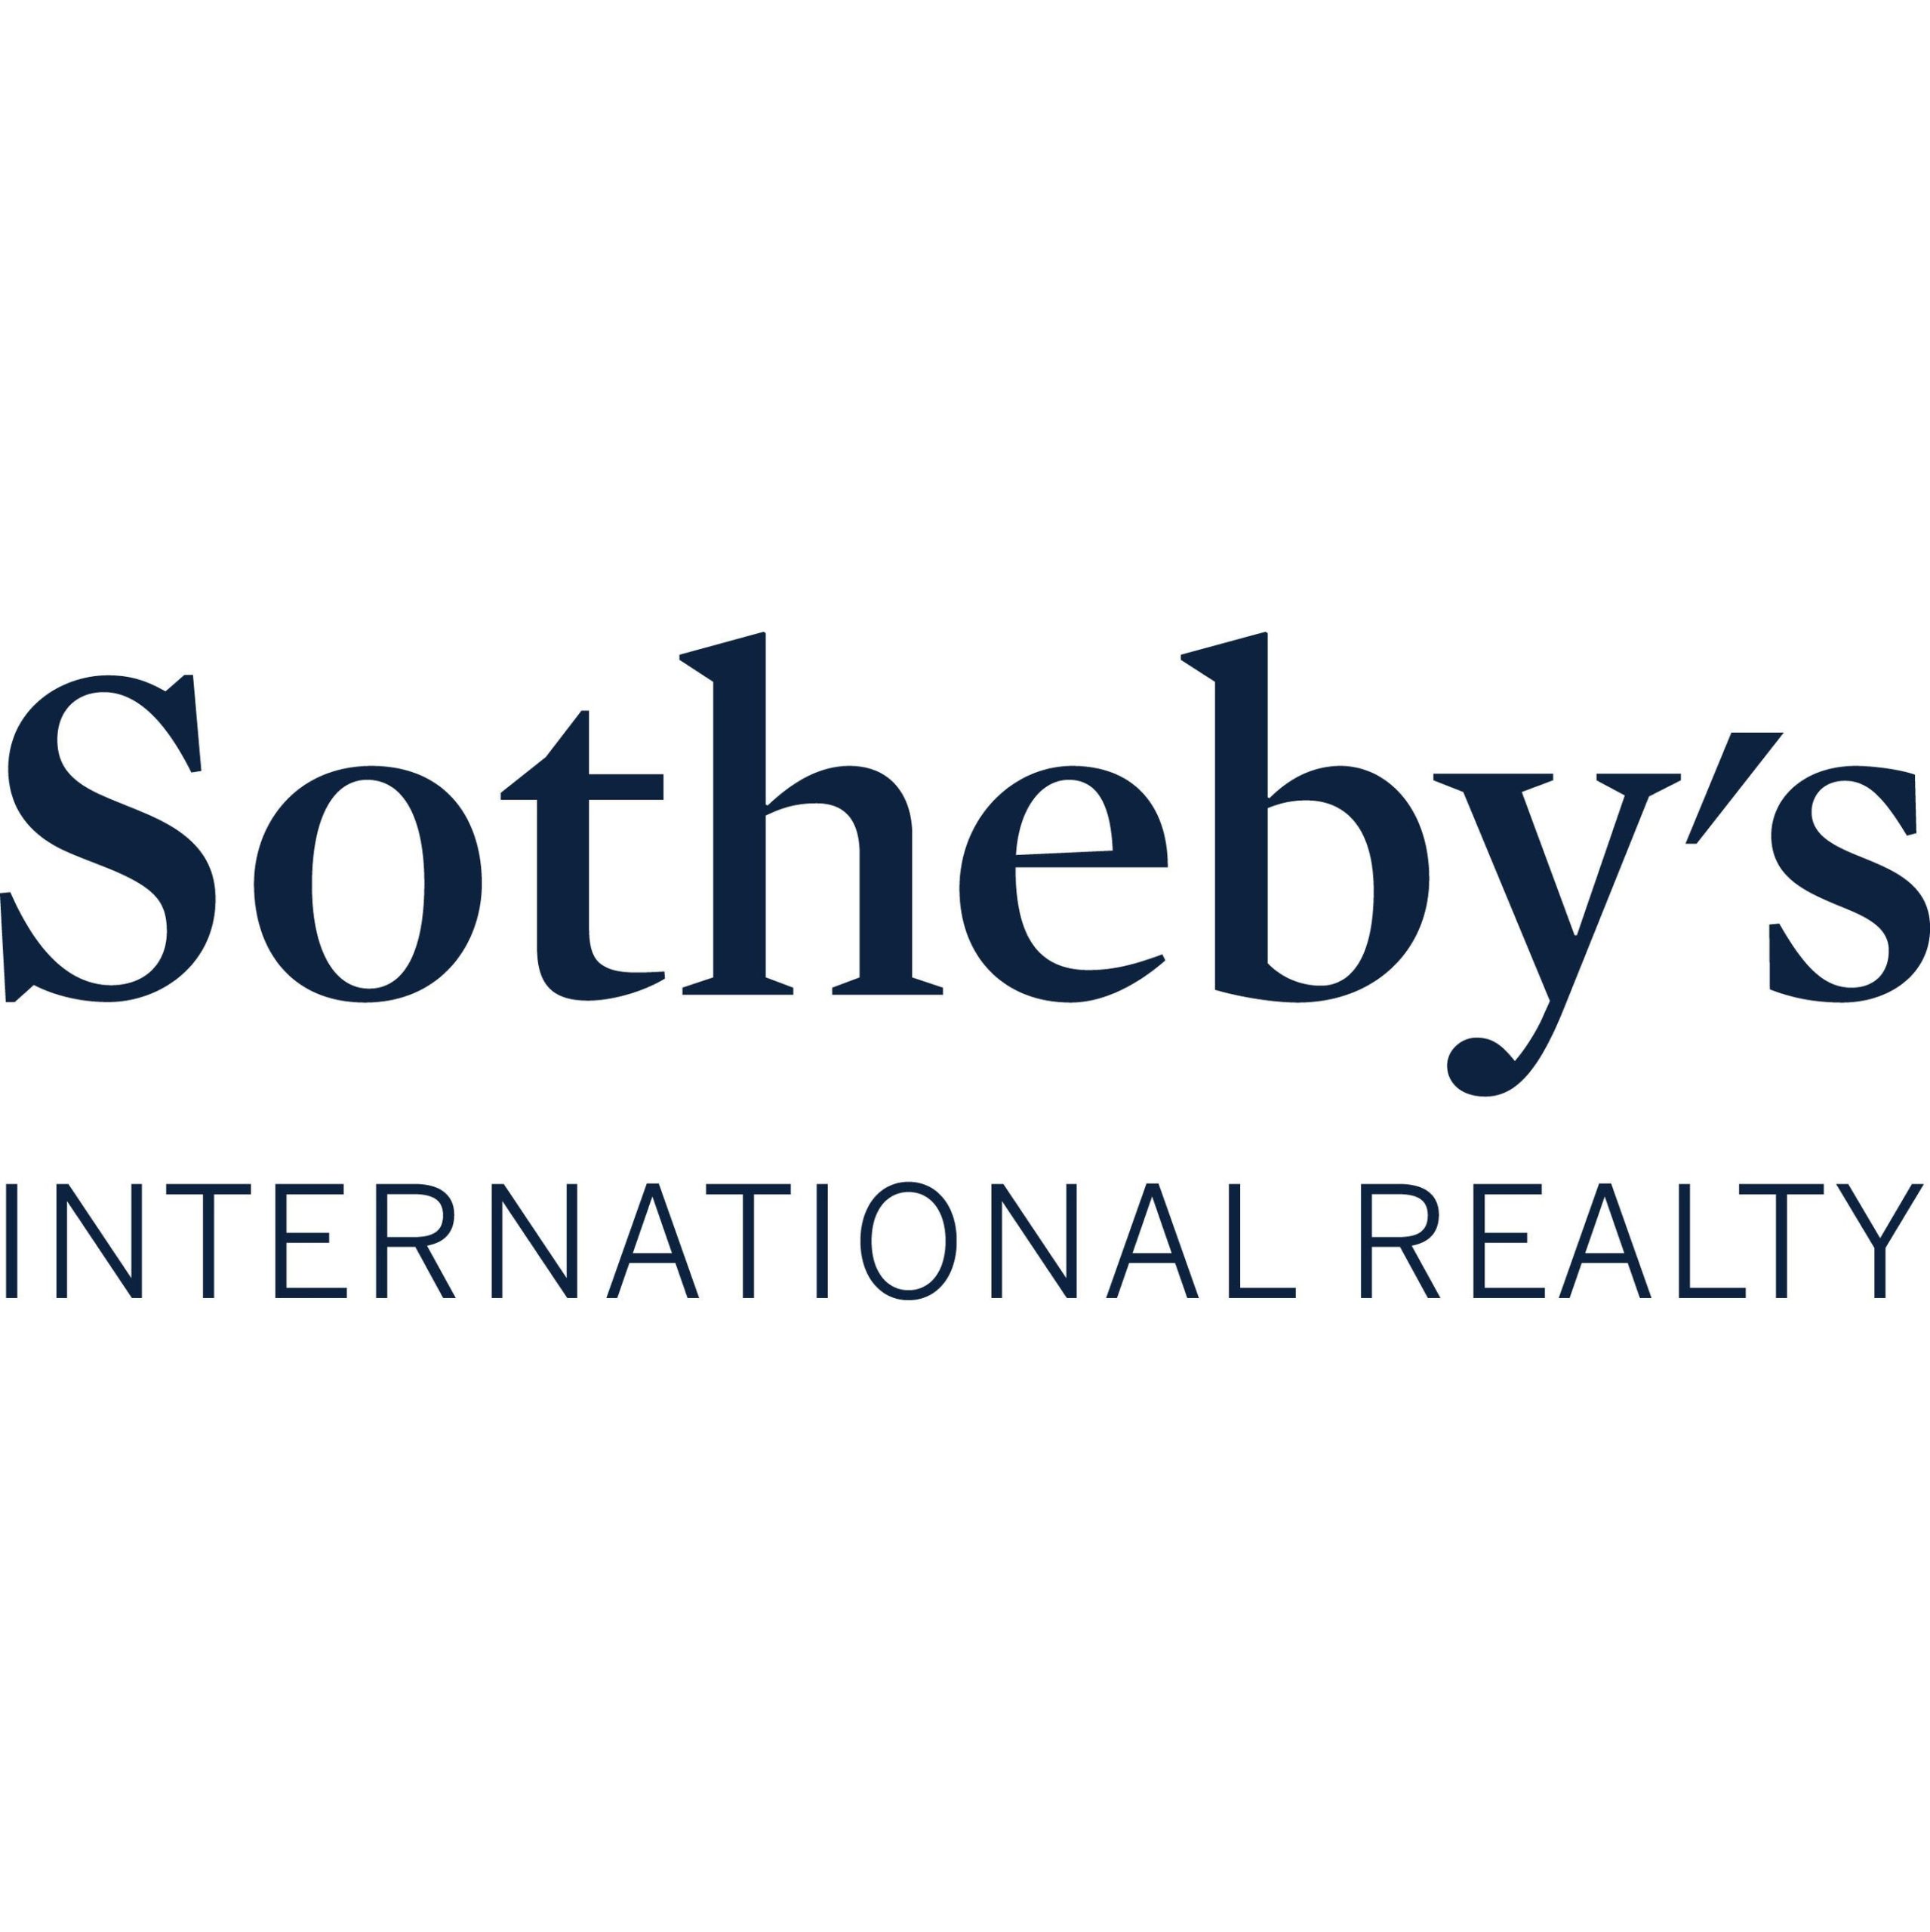 Sotheby's International Realty logo. (PRNewsFoto/Sotheby's International Realty) (PRNewsfoto/Sotheby's International Realty)